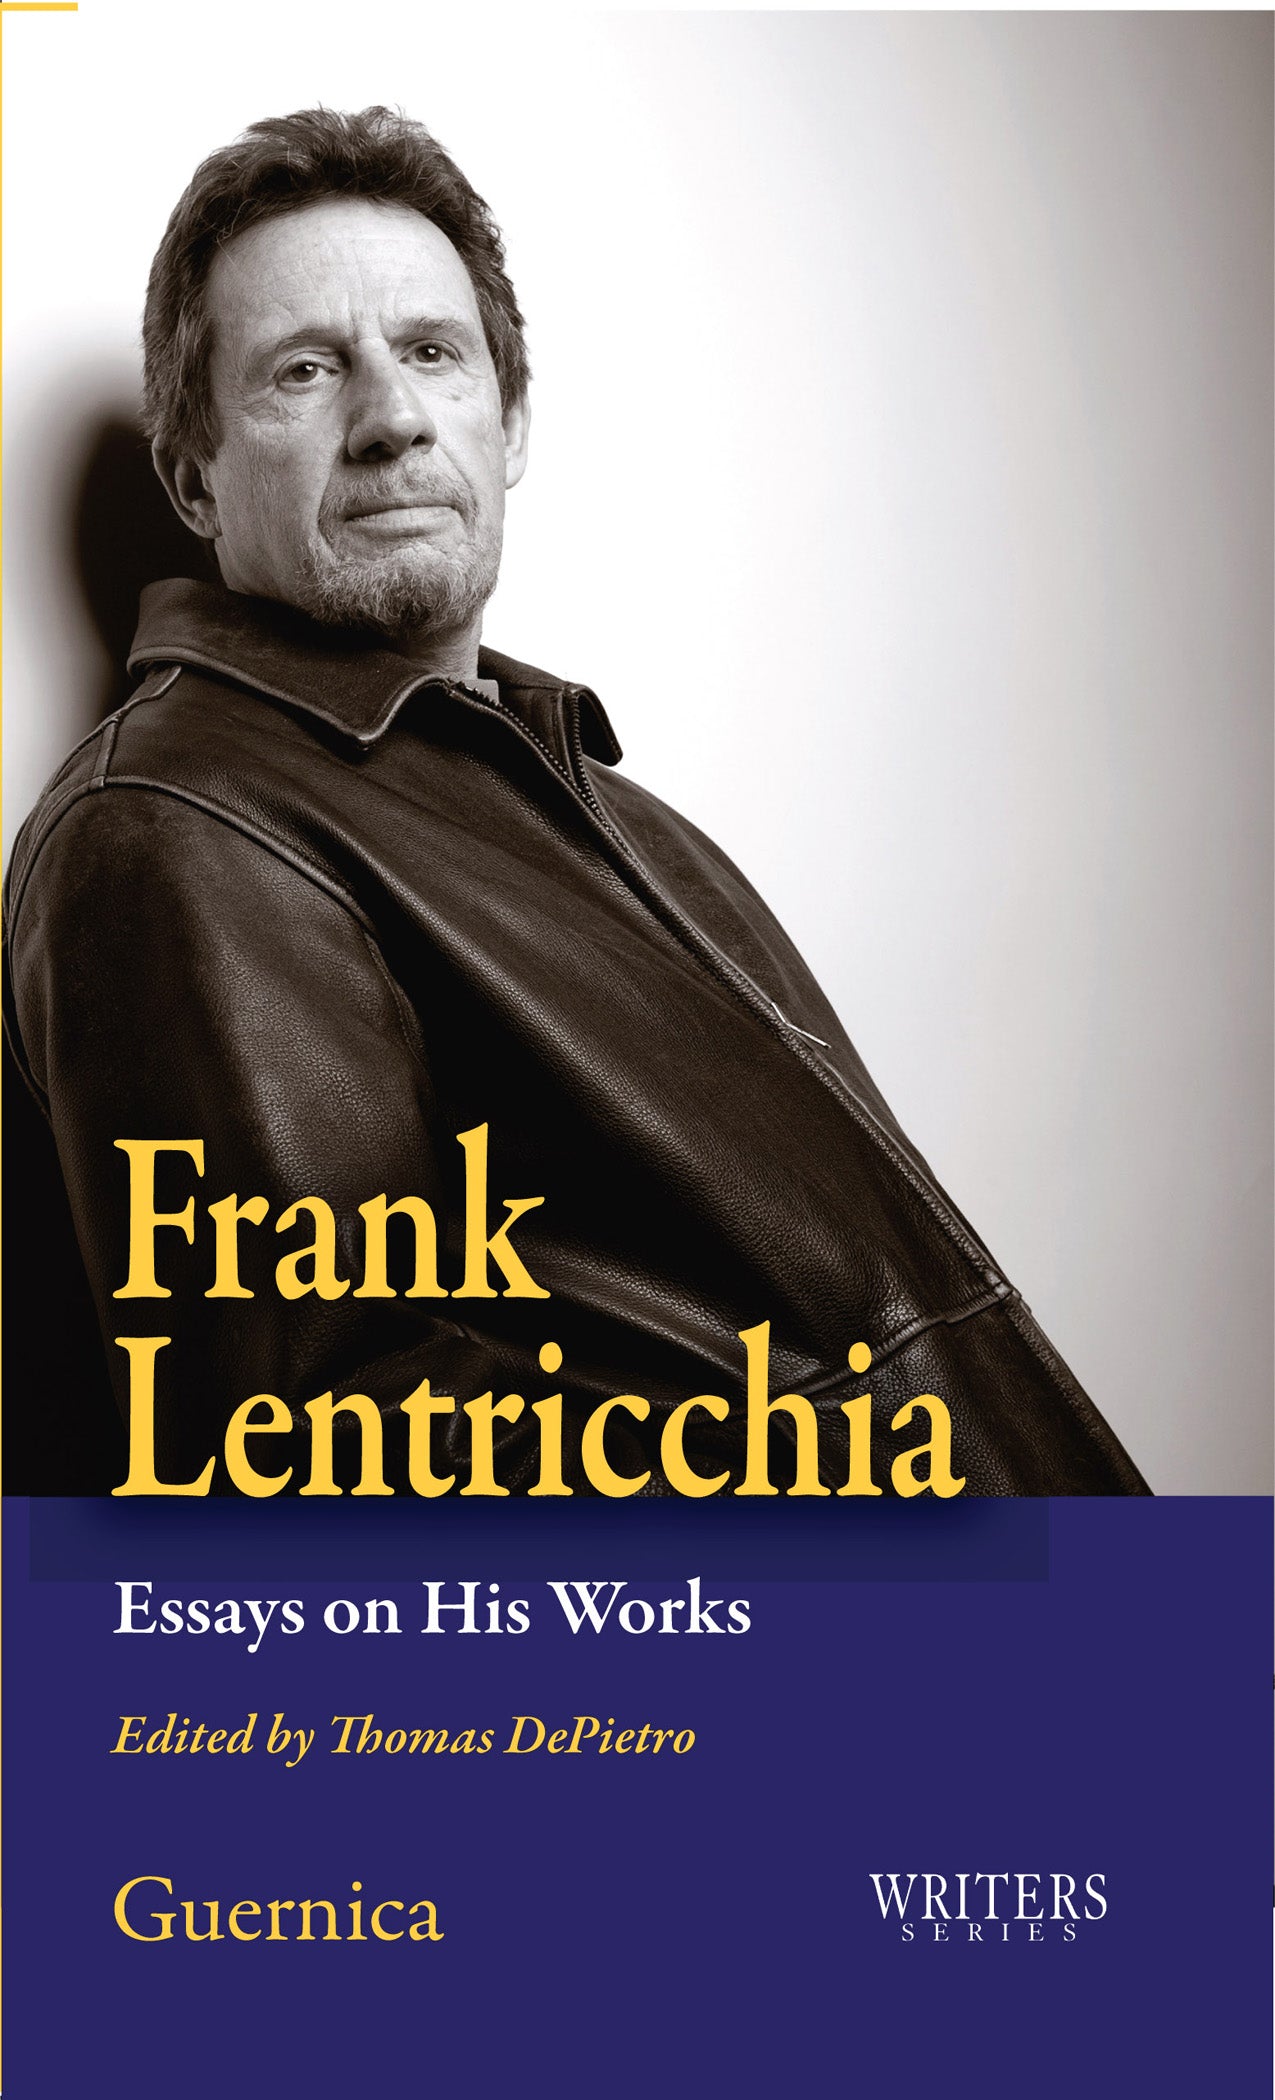 Frank Lentricchia